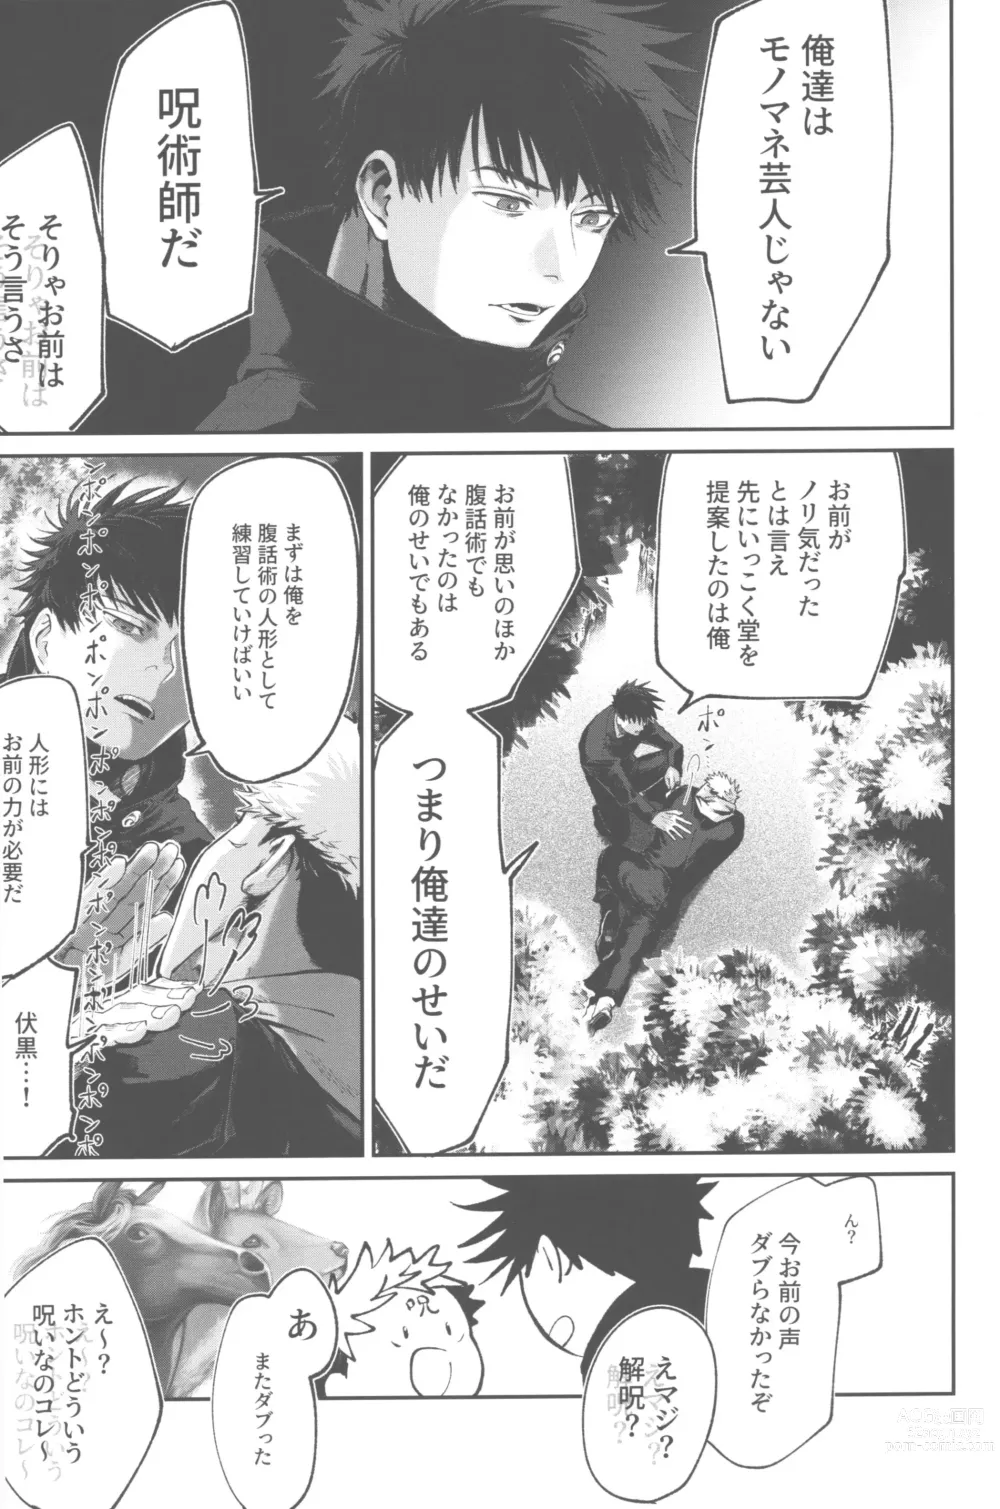 Page 36 of doujinshi Mune no Uchi Seiippai